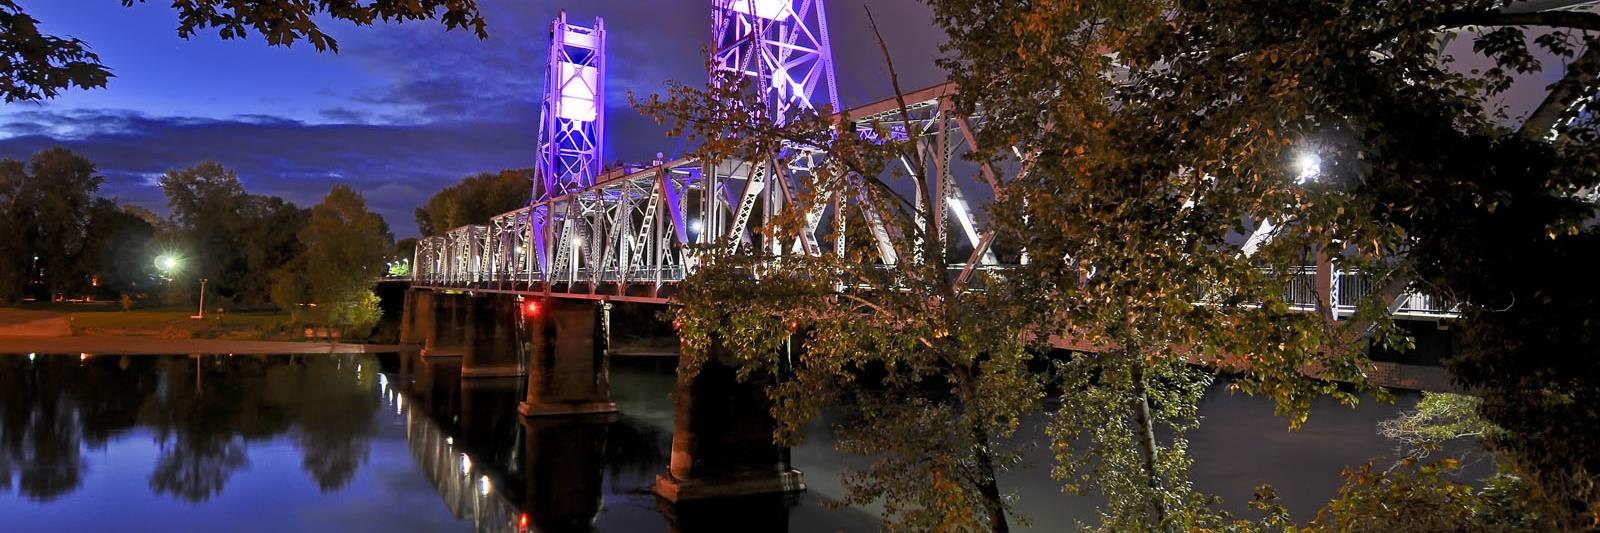 union-street-railroad-bridge-lights_web_1600x1067_color